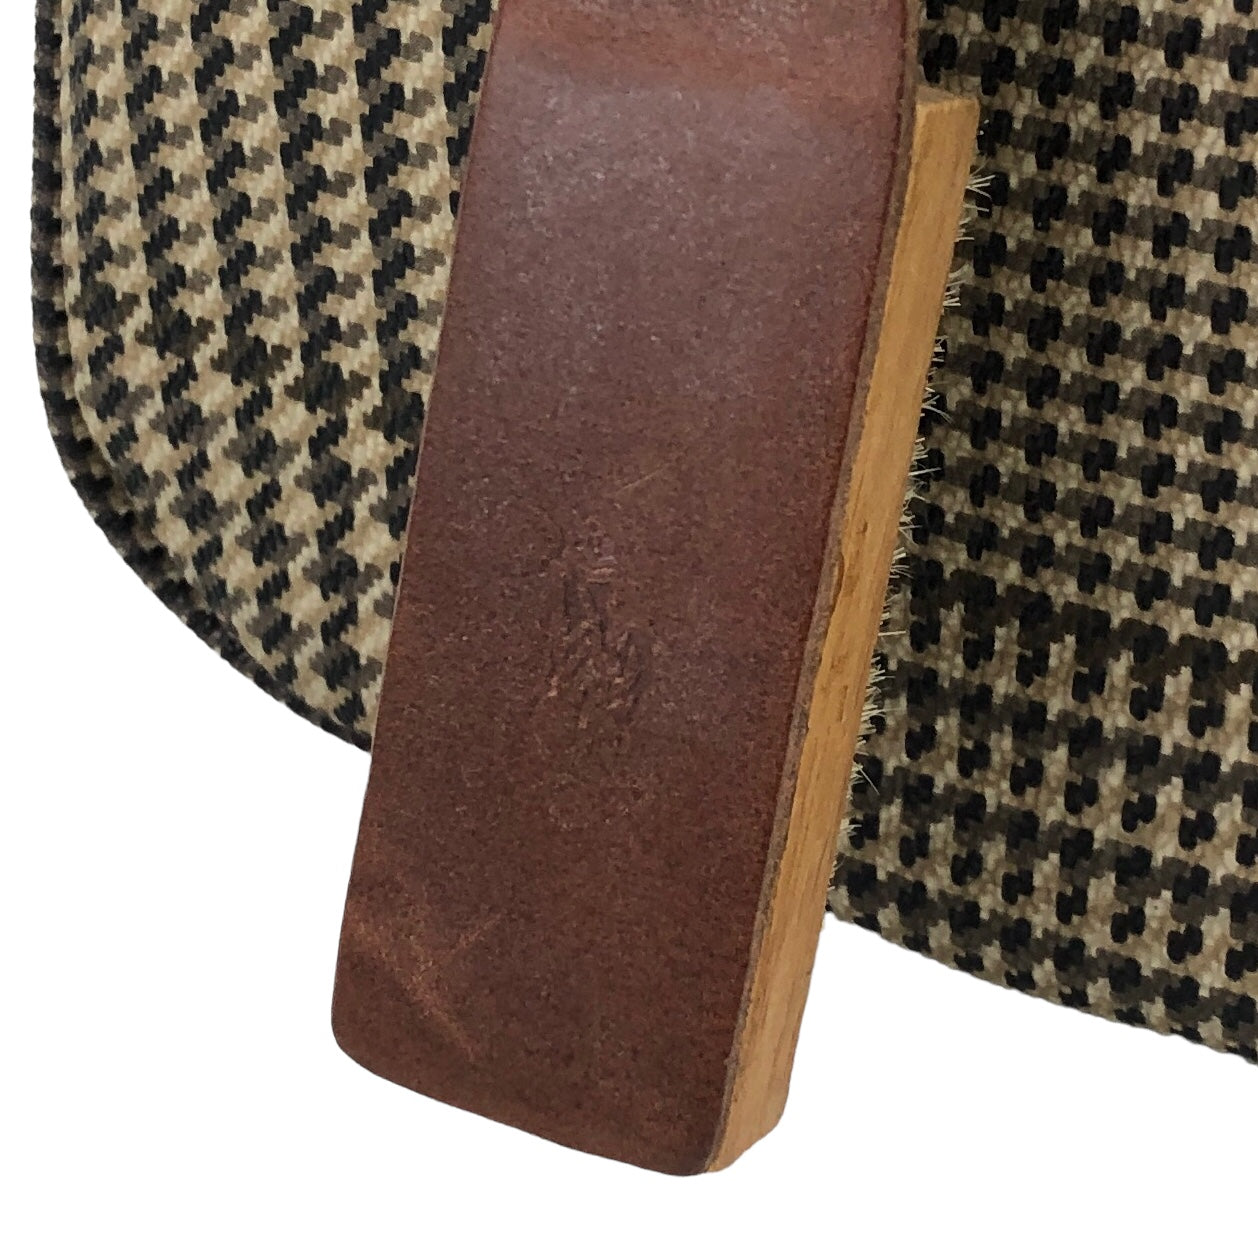 RALPH LAUREN Leather Small Boston bag Handbag Brown Vintage epcyi6